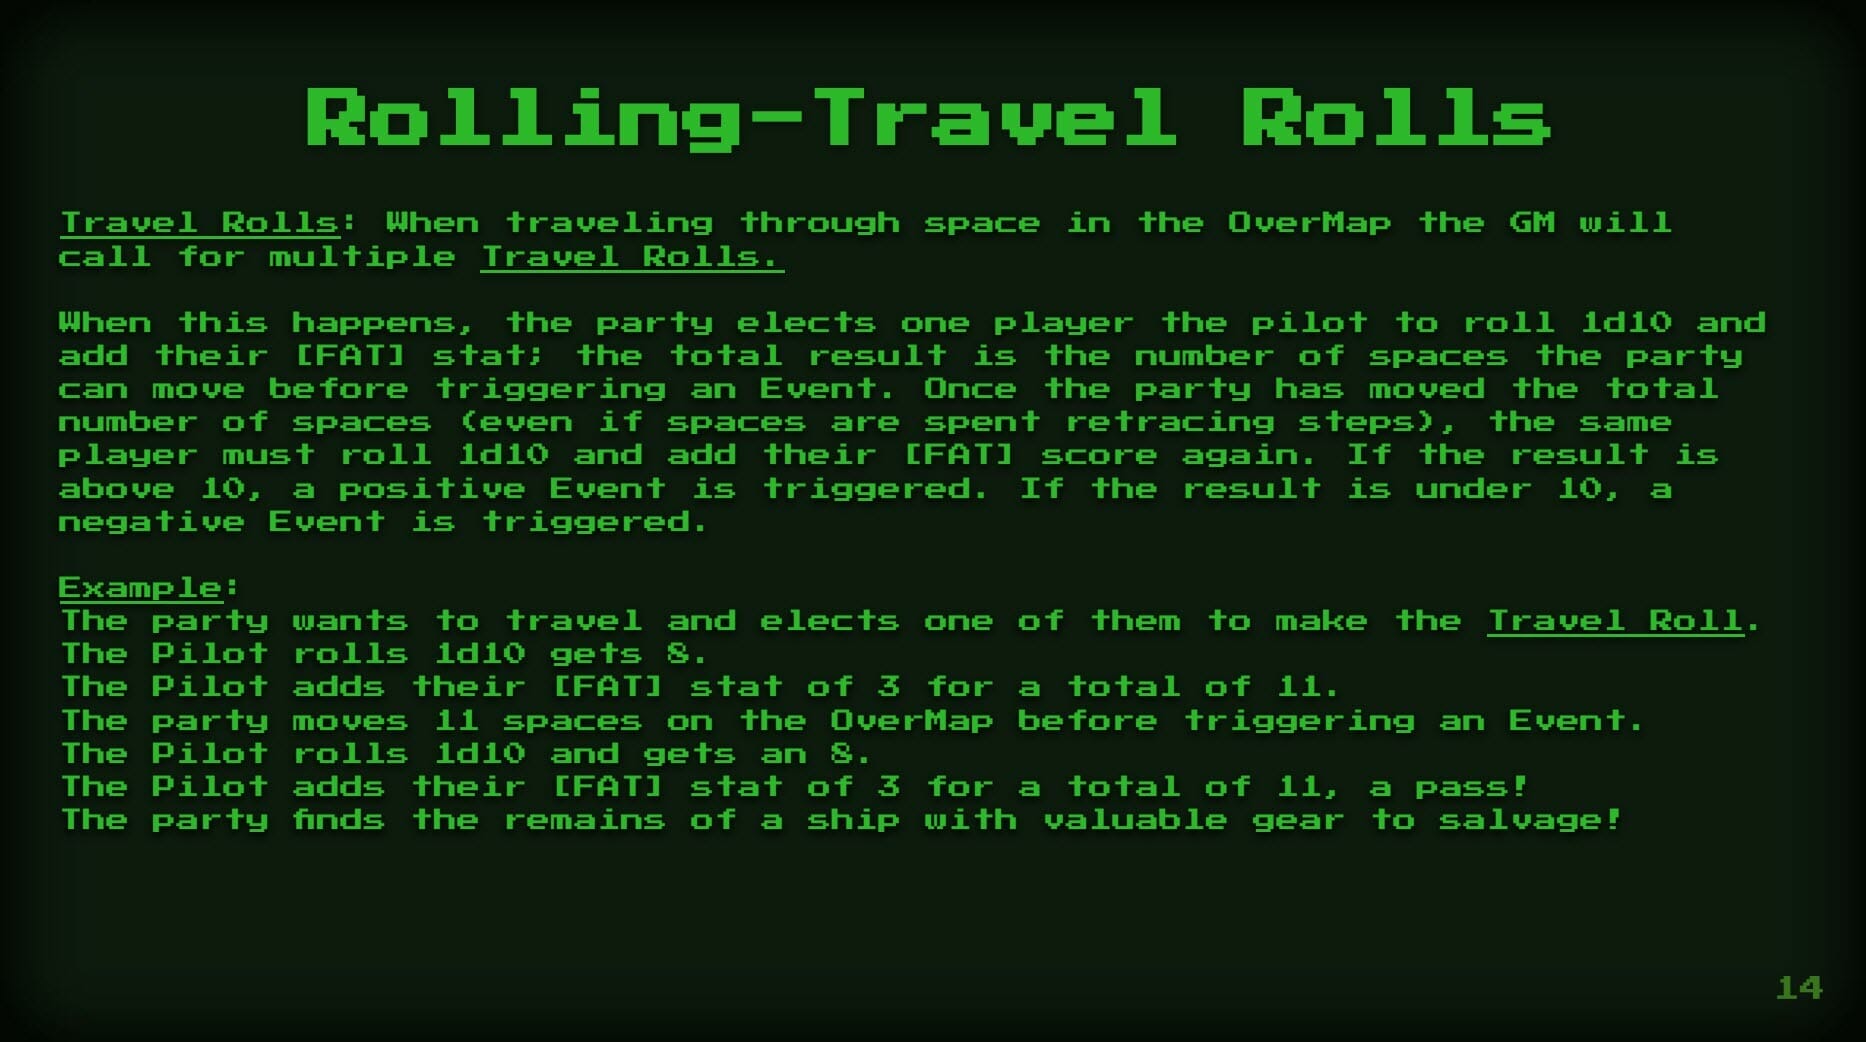 Travel Rolls